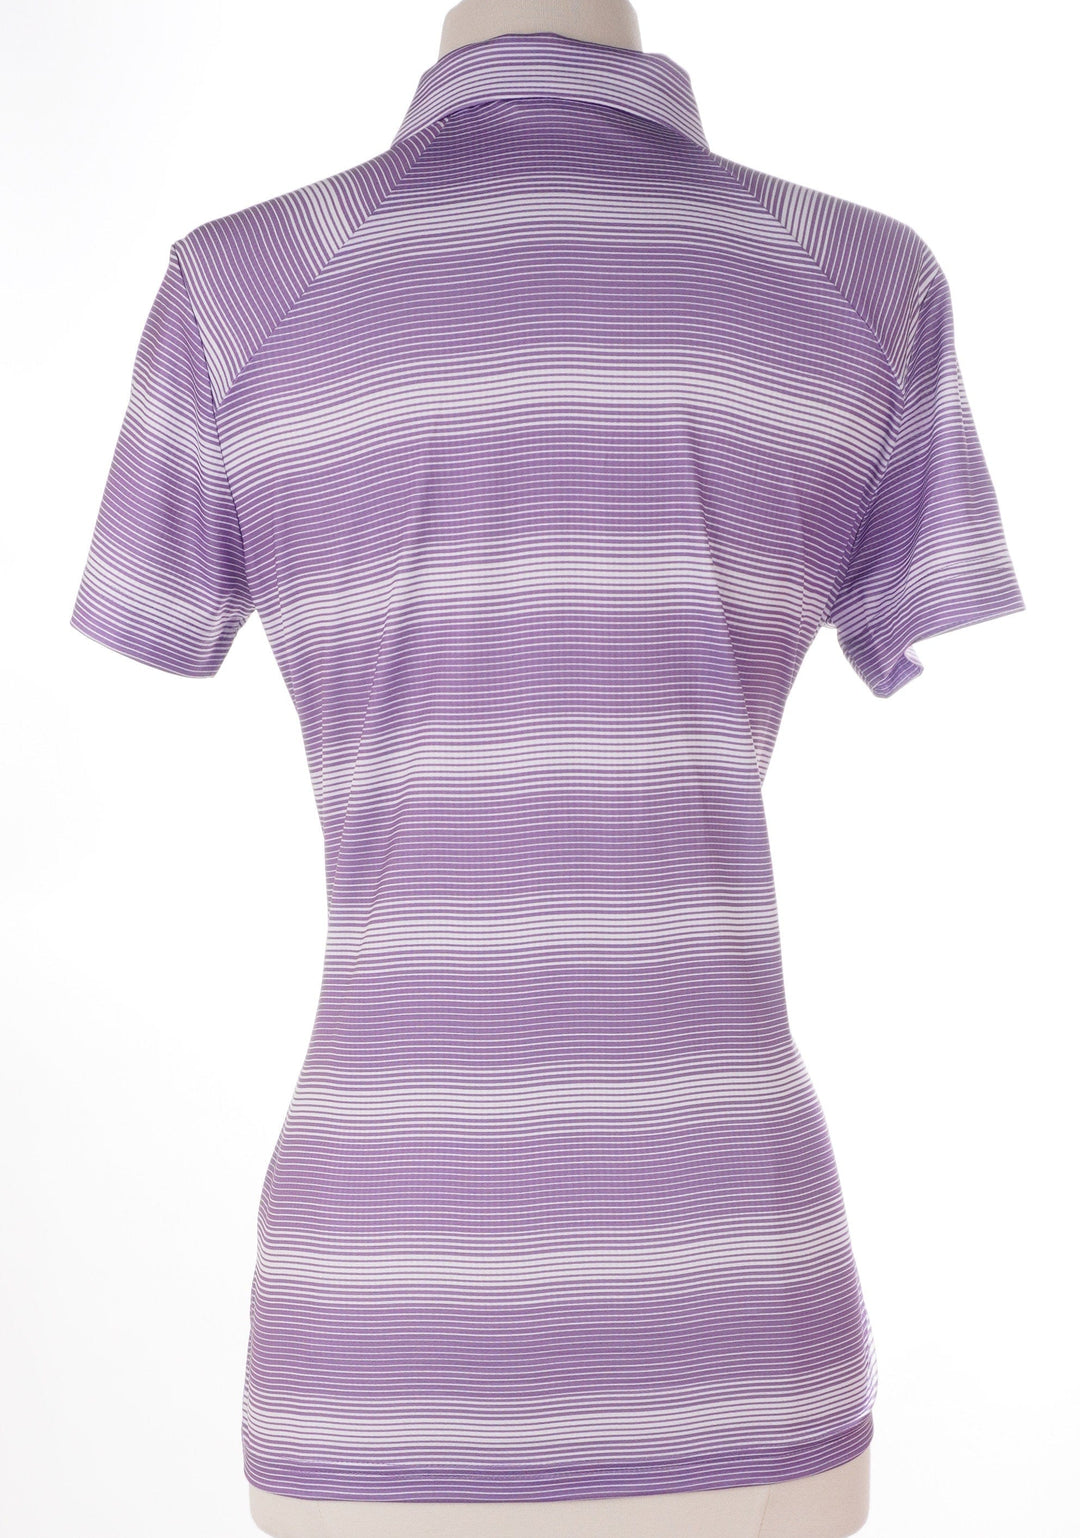 Levelwear Verve Small / Purple / Consigned Levelwear Verve Nina Short Sleeve - Purple - Size Small